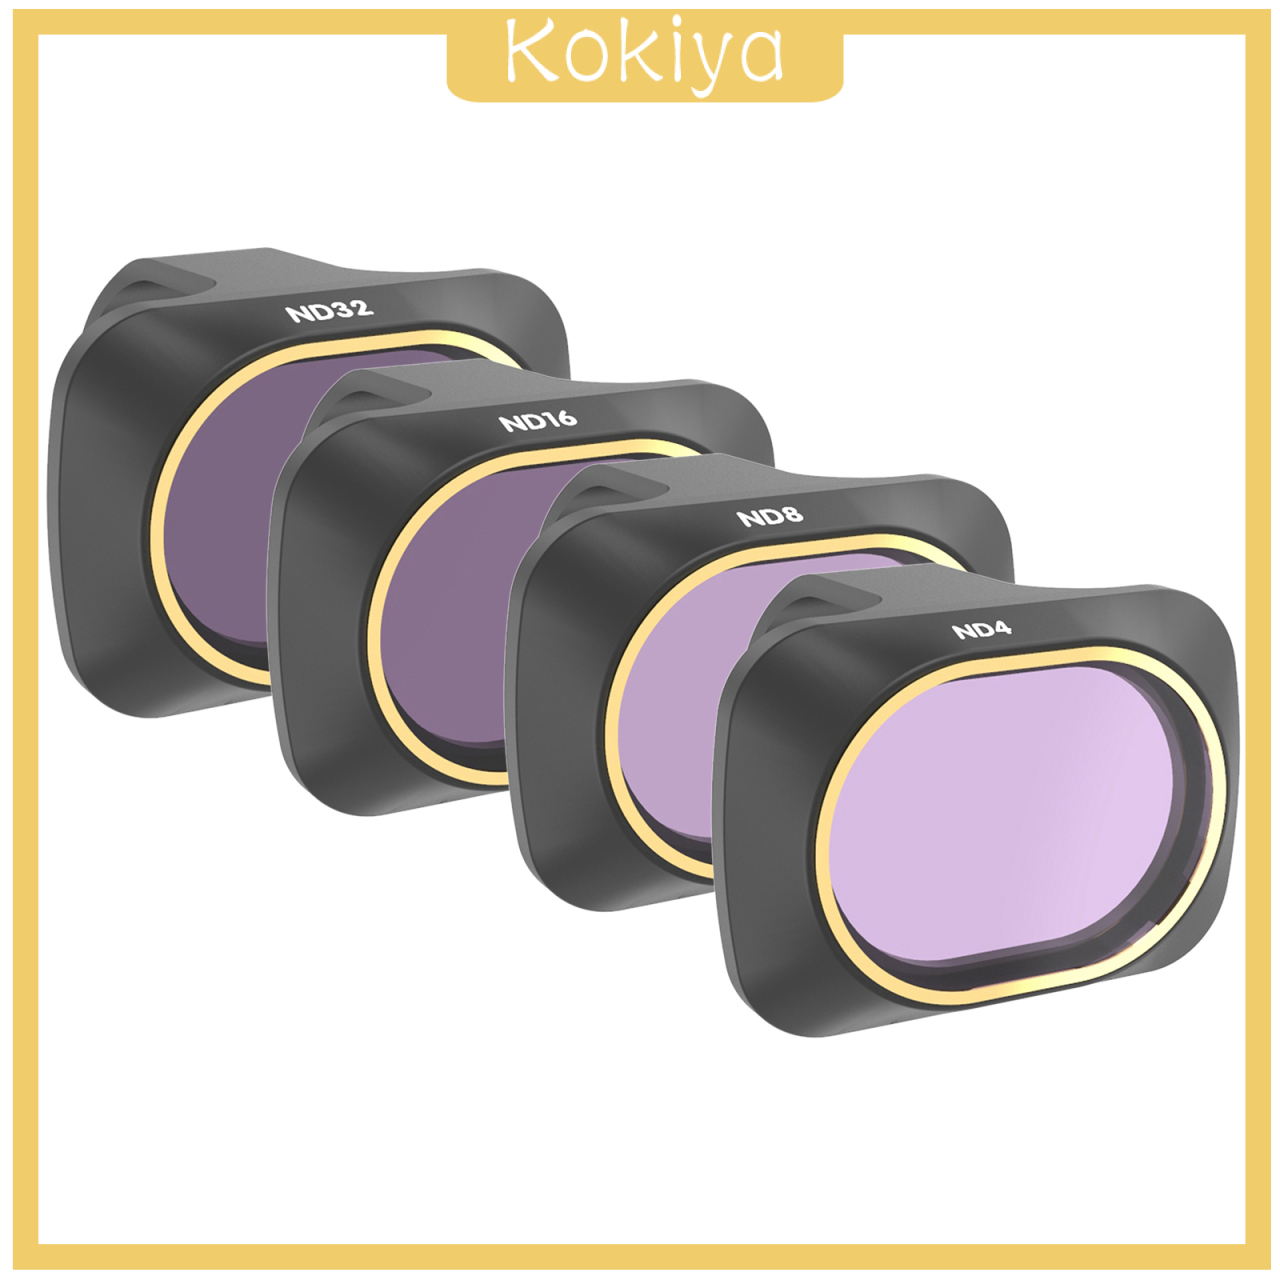 [KOKIYA]High Quality Lens Filter for DJI Mavic Mini Mini 2 Drone Accessories